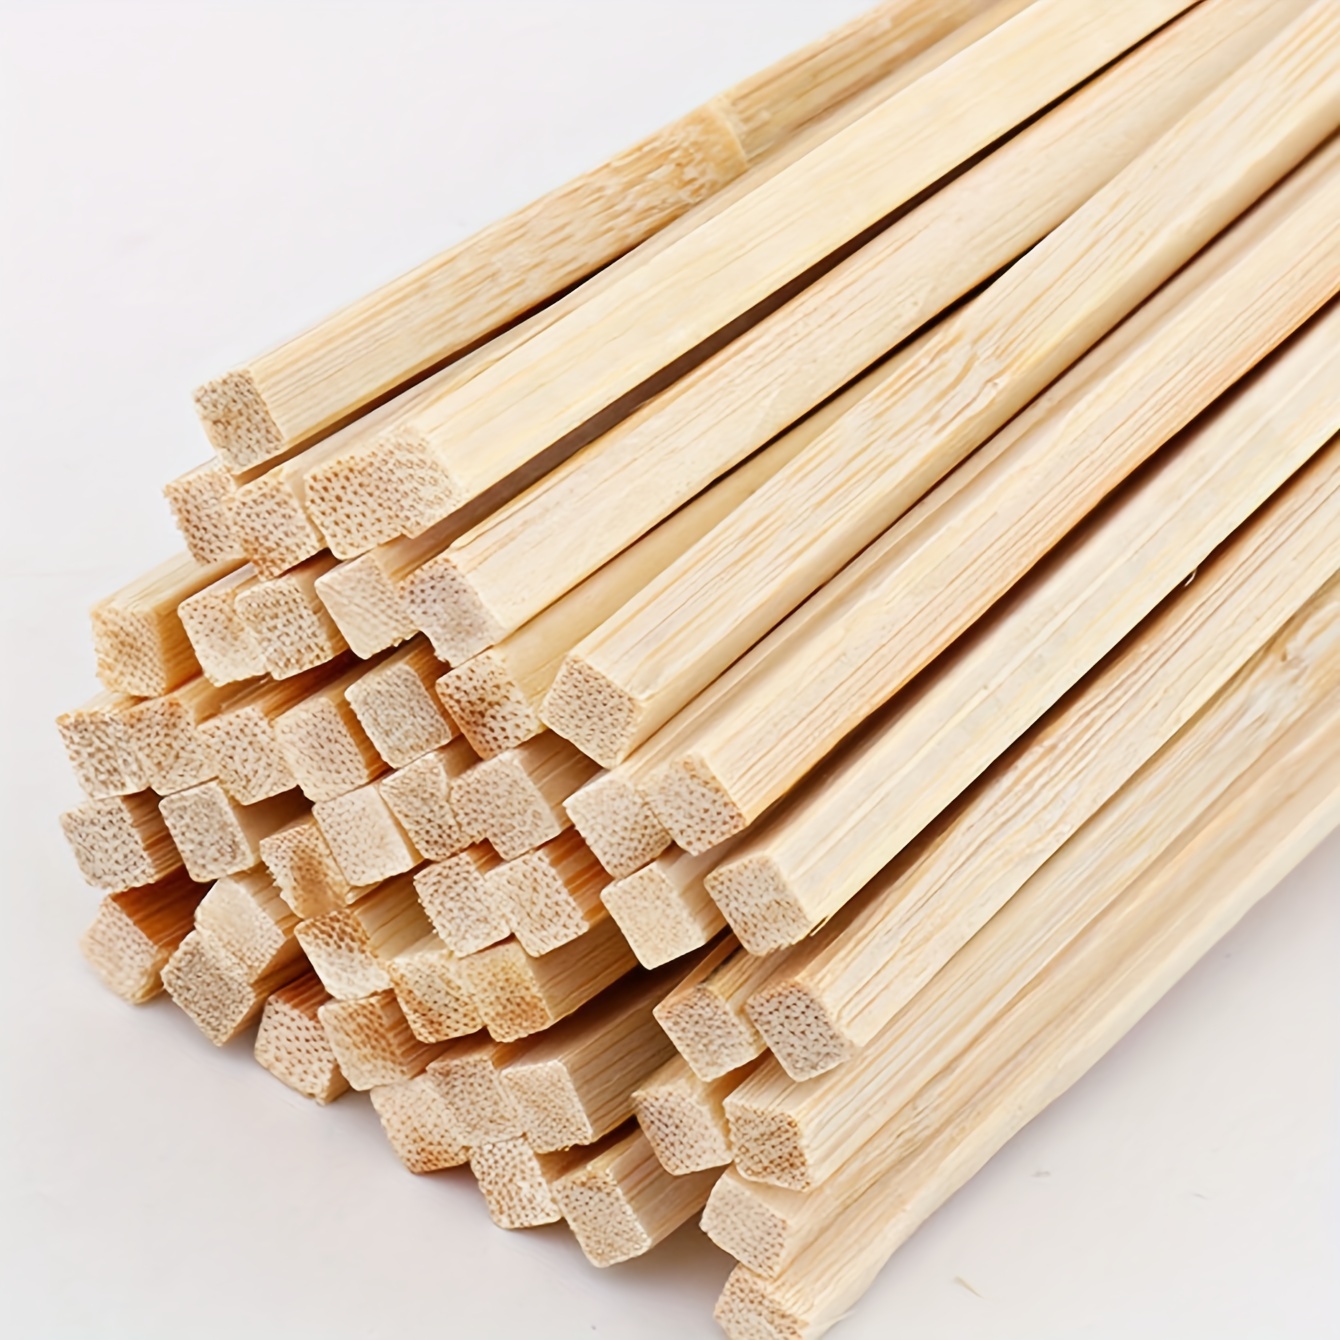 150 varillas de madera de balsa de 1/8 x 1/8 x 12 pulgadas, tiras de madera  sin terminar para hacer manualidades, proyectos